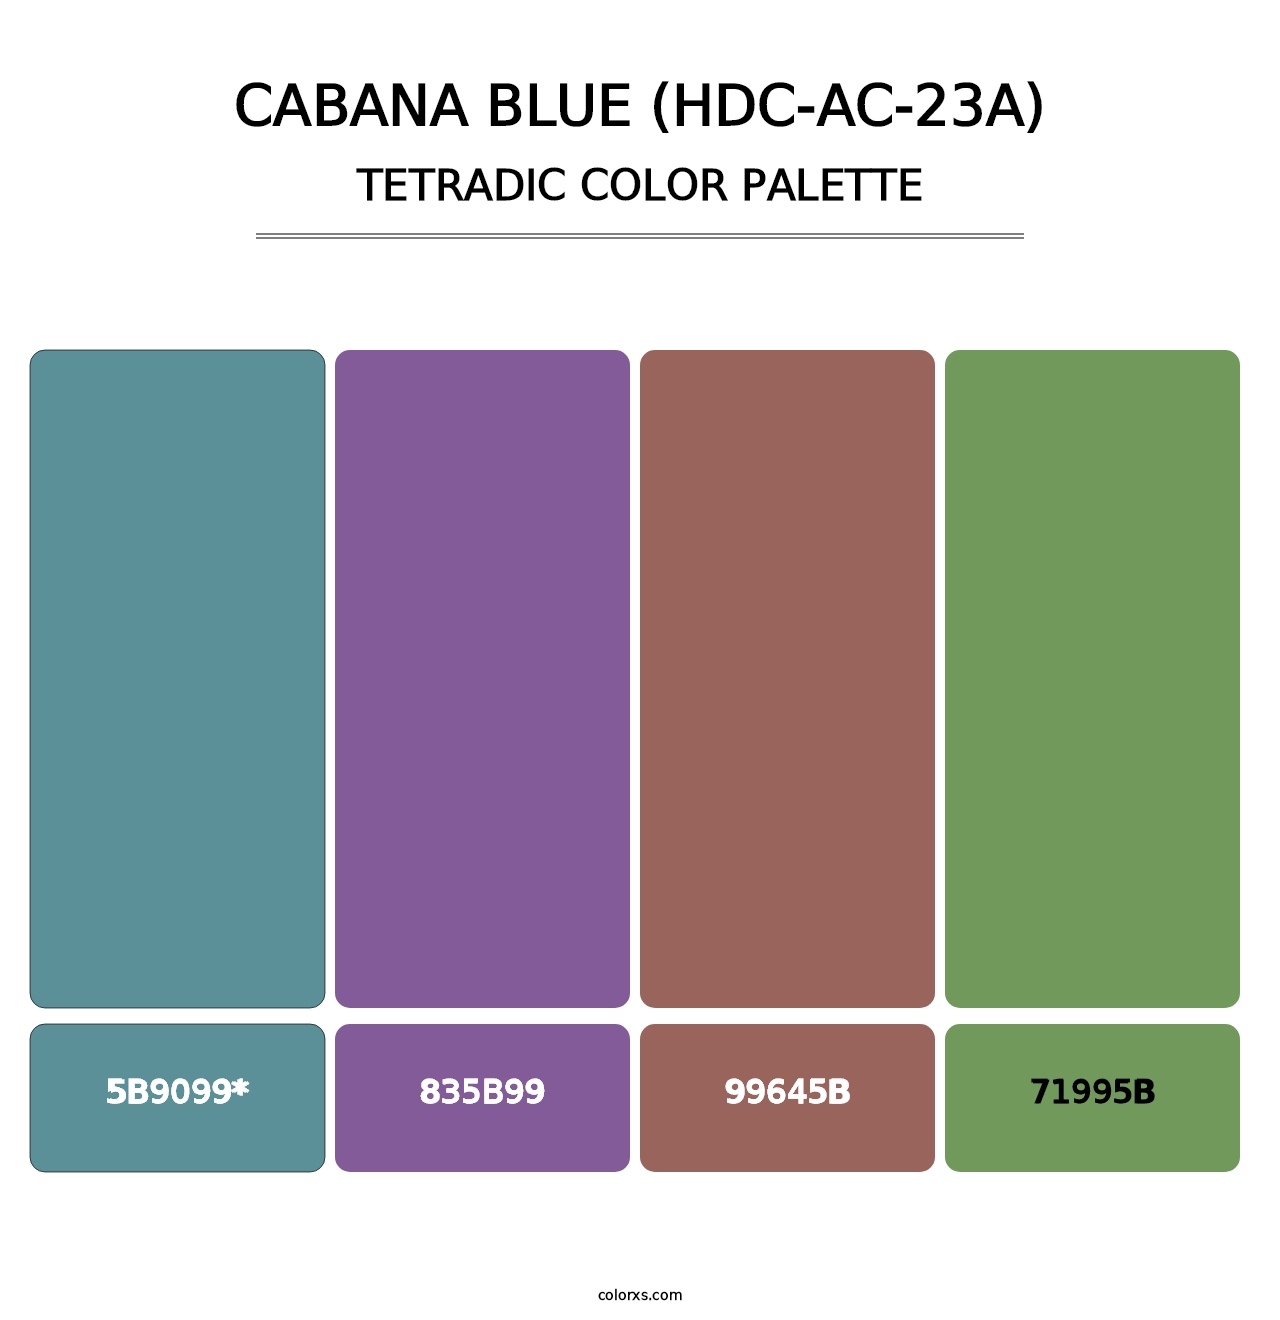 Cabana Blue (HDC-AC-23A) - Tetradic Color Palette